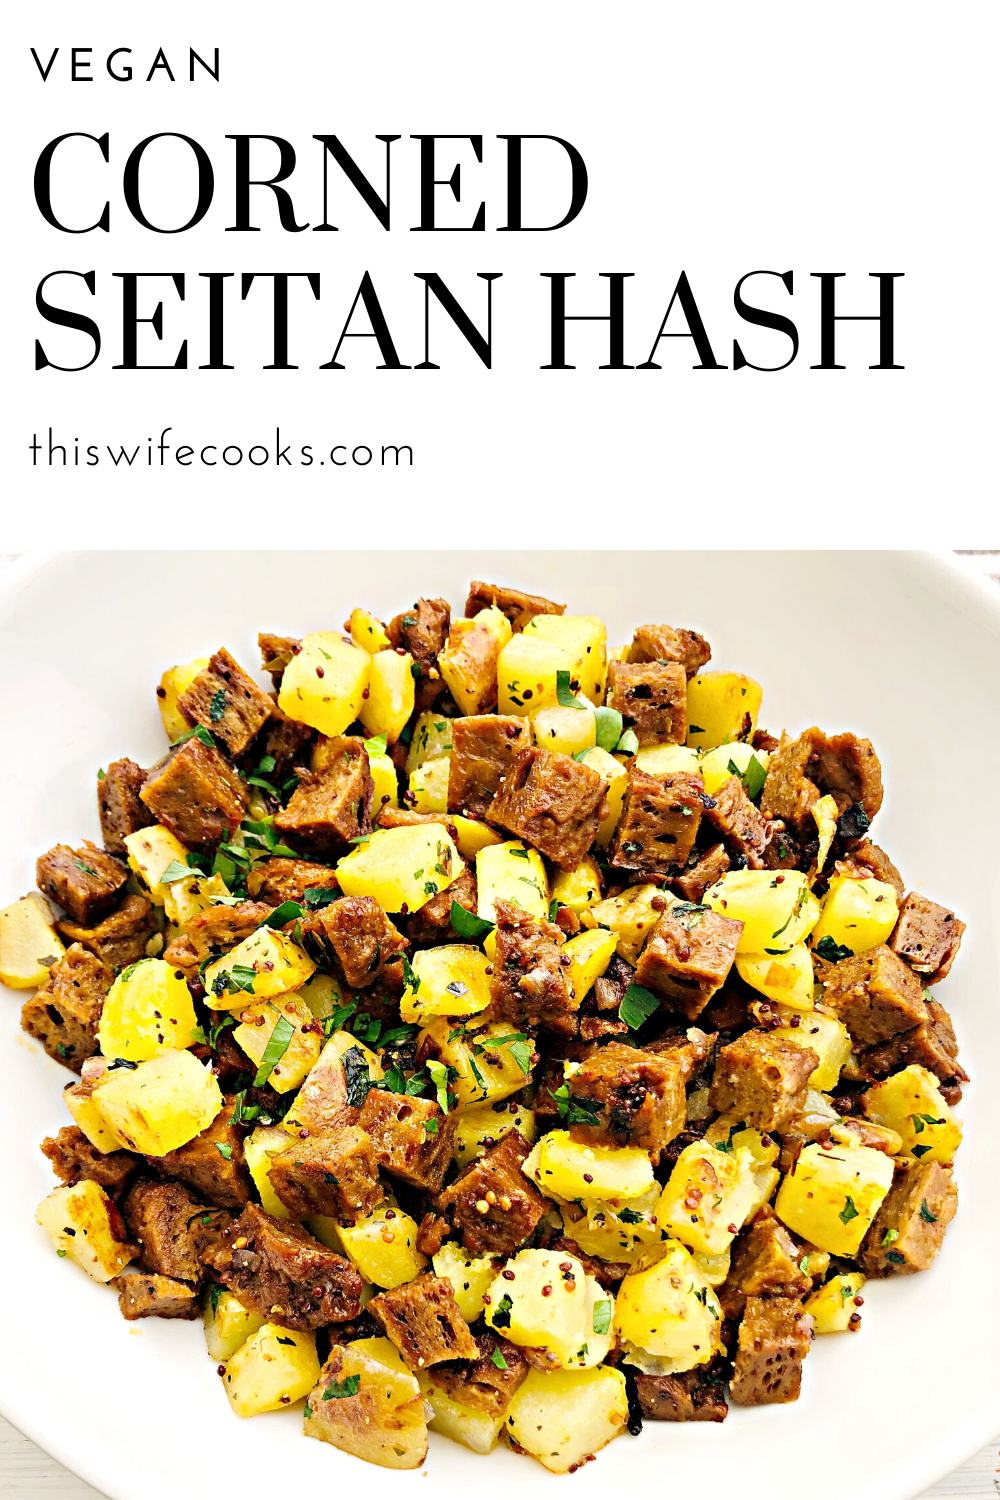 Vegan Corned Seitan Hash - A plant-based alternative to corned beef hash!  via @thiswifecooks